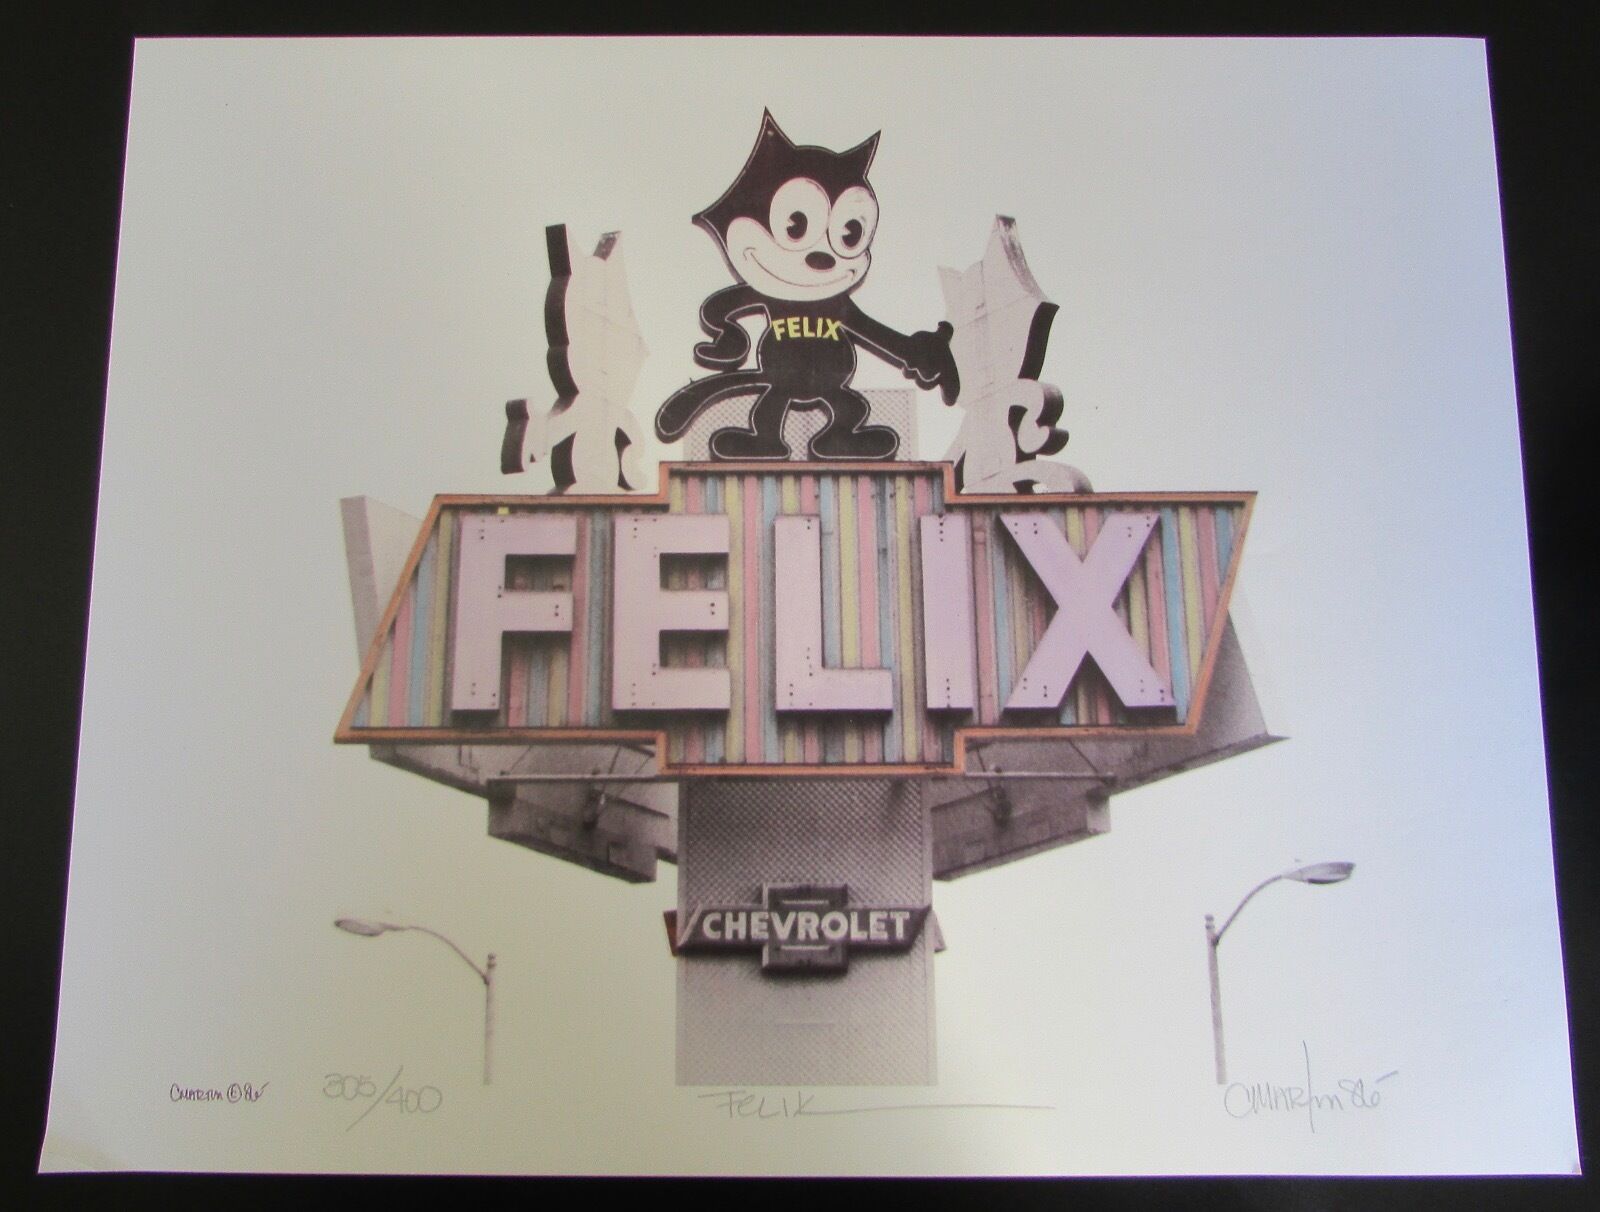 Felix the Cat Photograph Print by C Martin Blue Moon Graphics 305/400 1986 Popularne super mile widziane